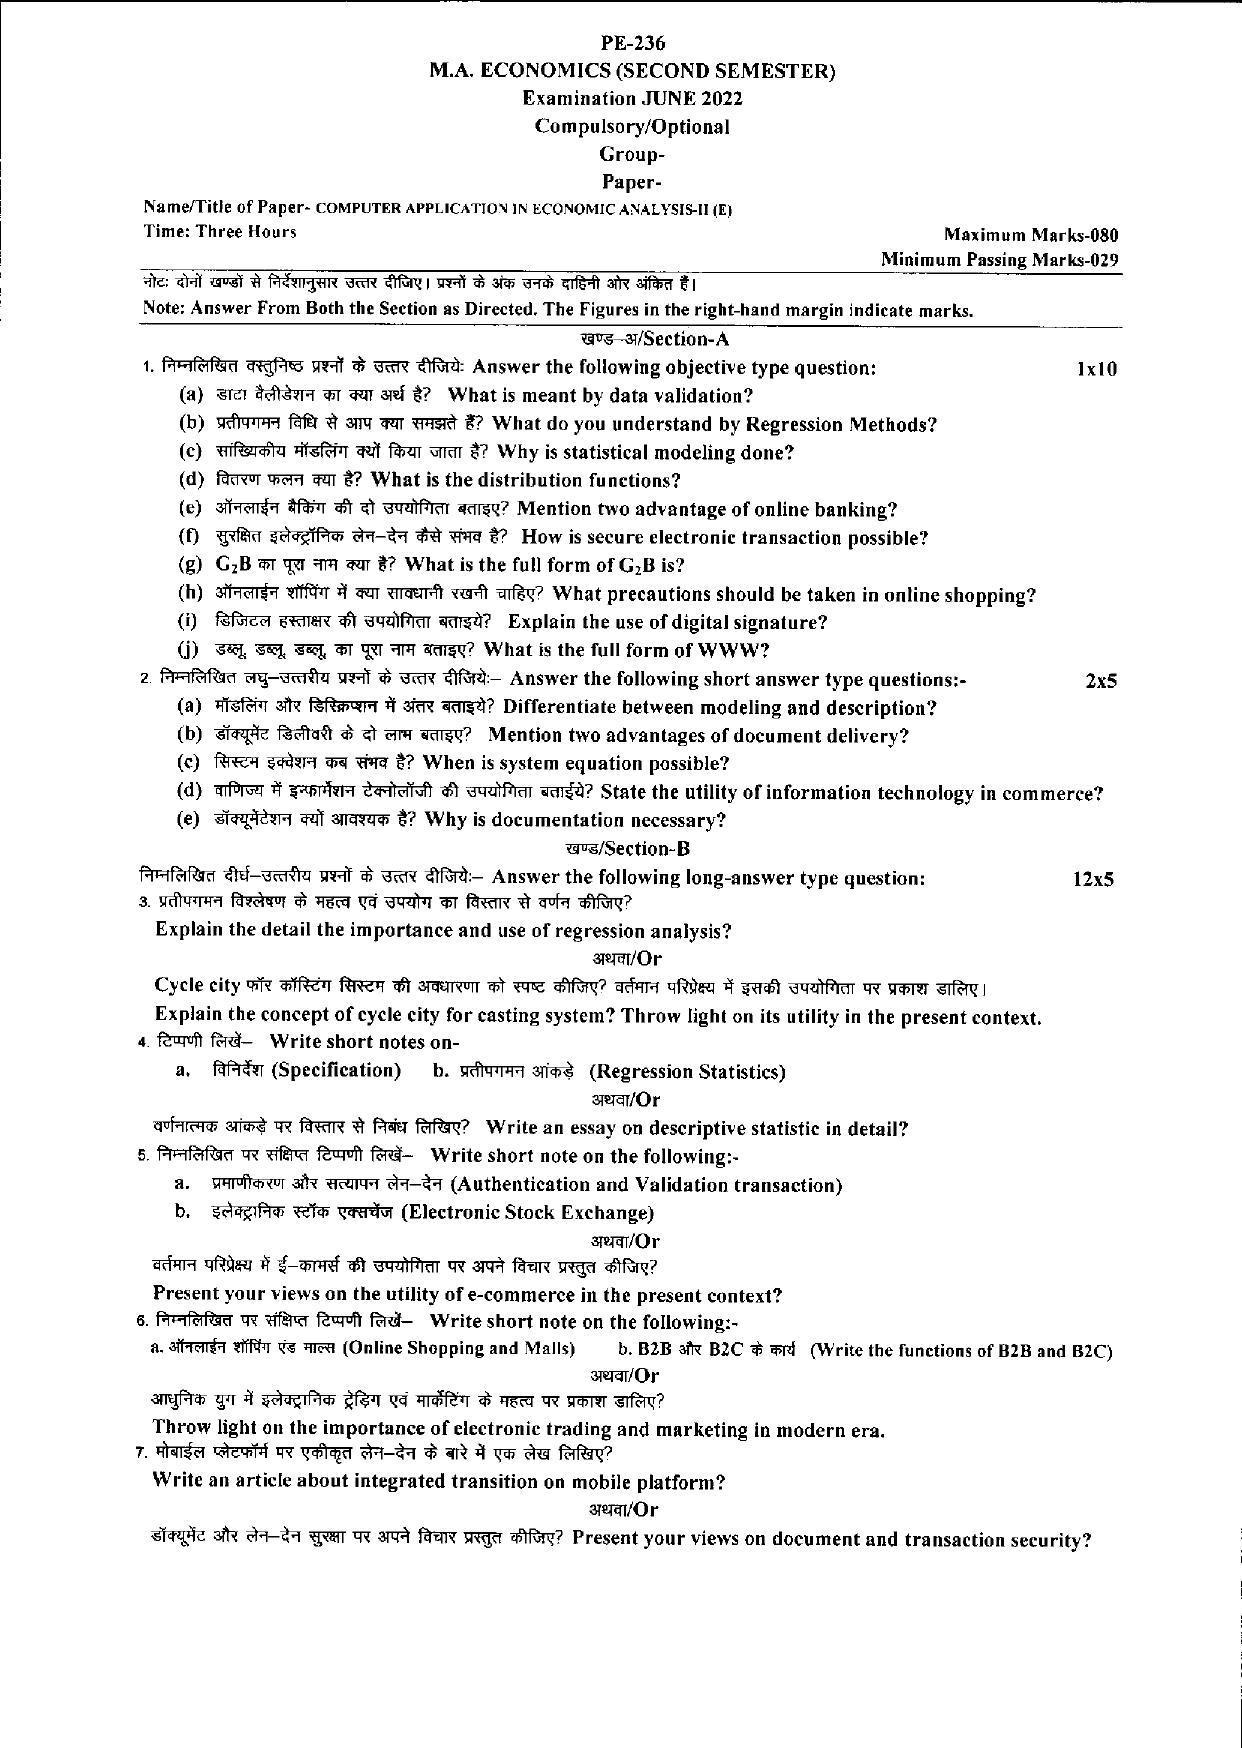 Bilaspur University Question Paper June 2022:M.A. Economics (Second Semester)Computer Application In Economic Analysis (Group -E) Paper 1 - Page 1